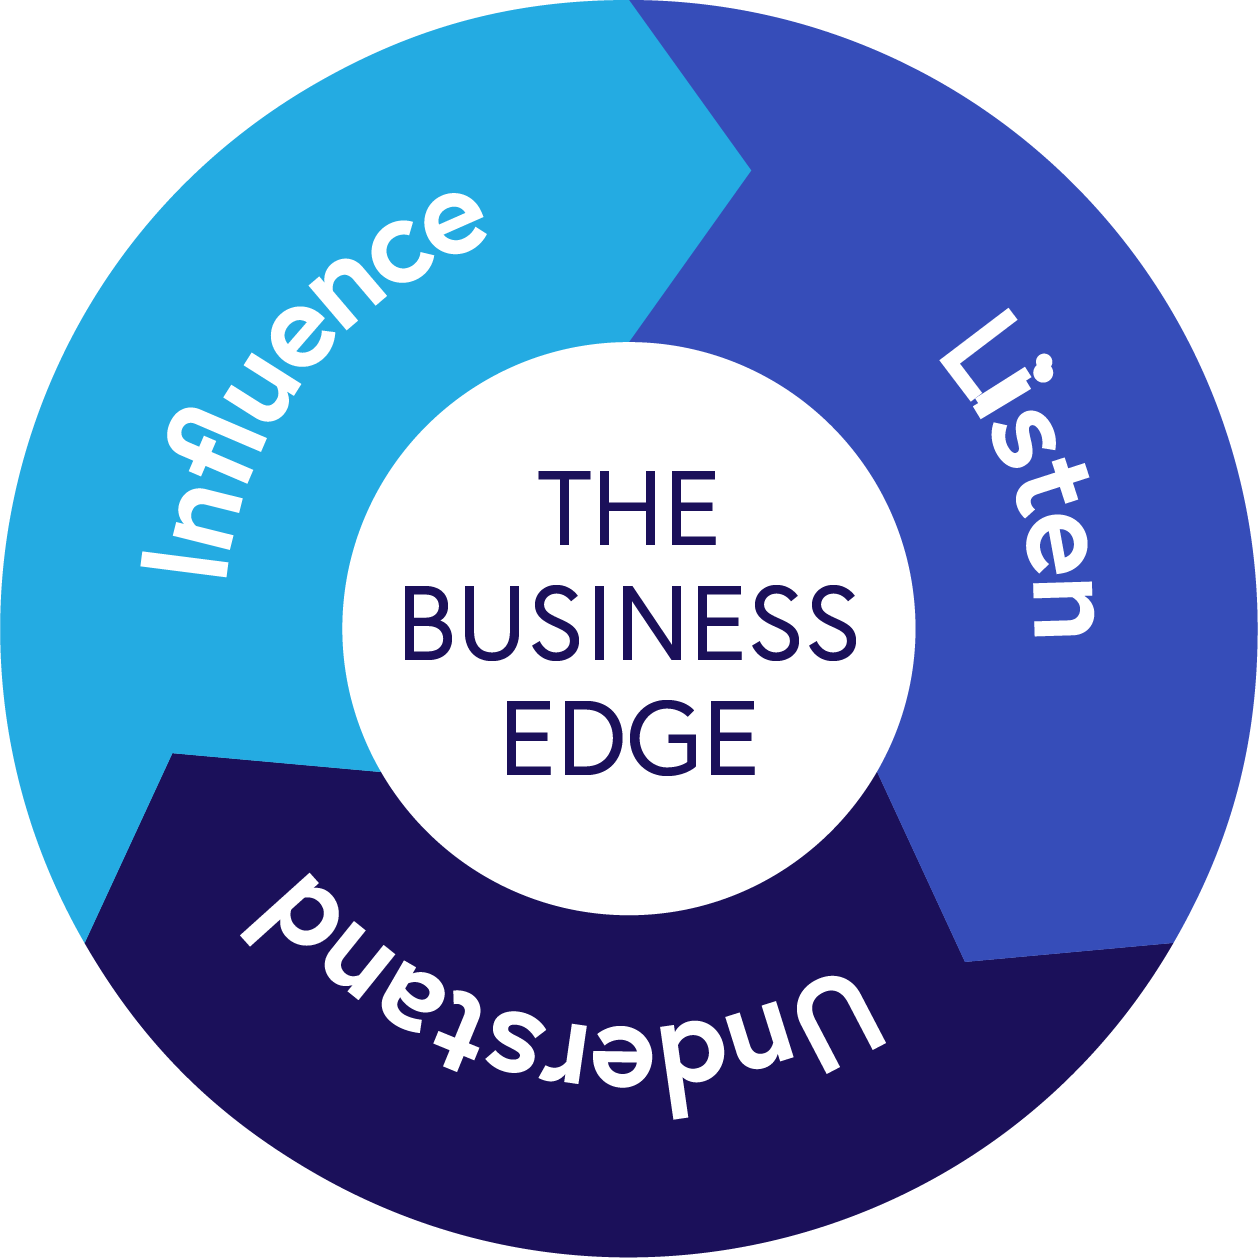 Business edge illustration